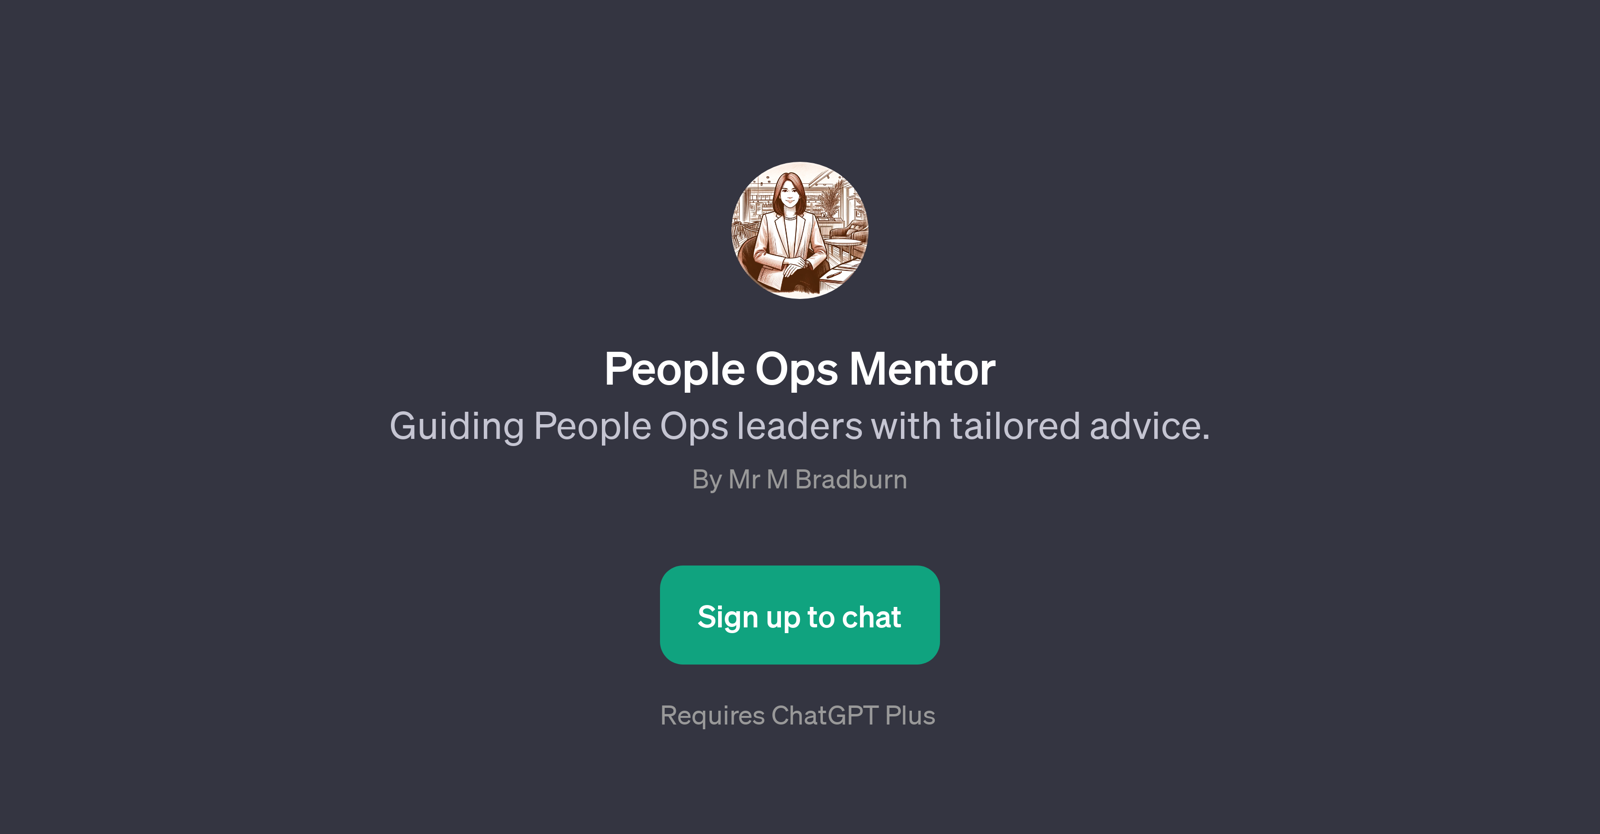 People Ops Mentor website